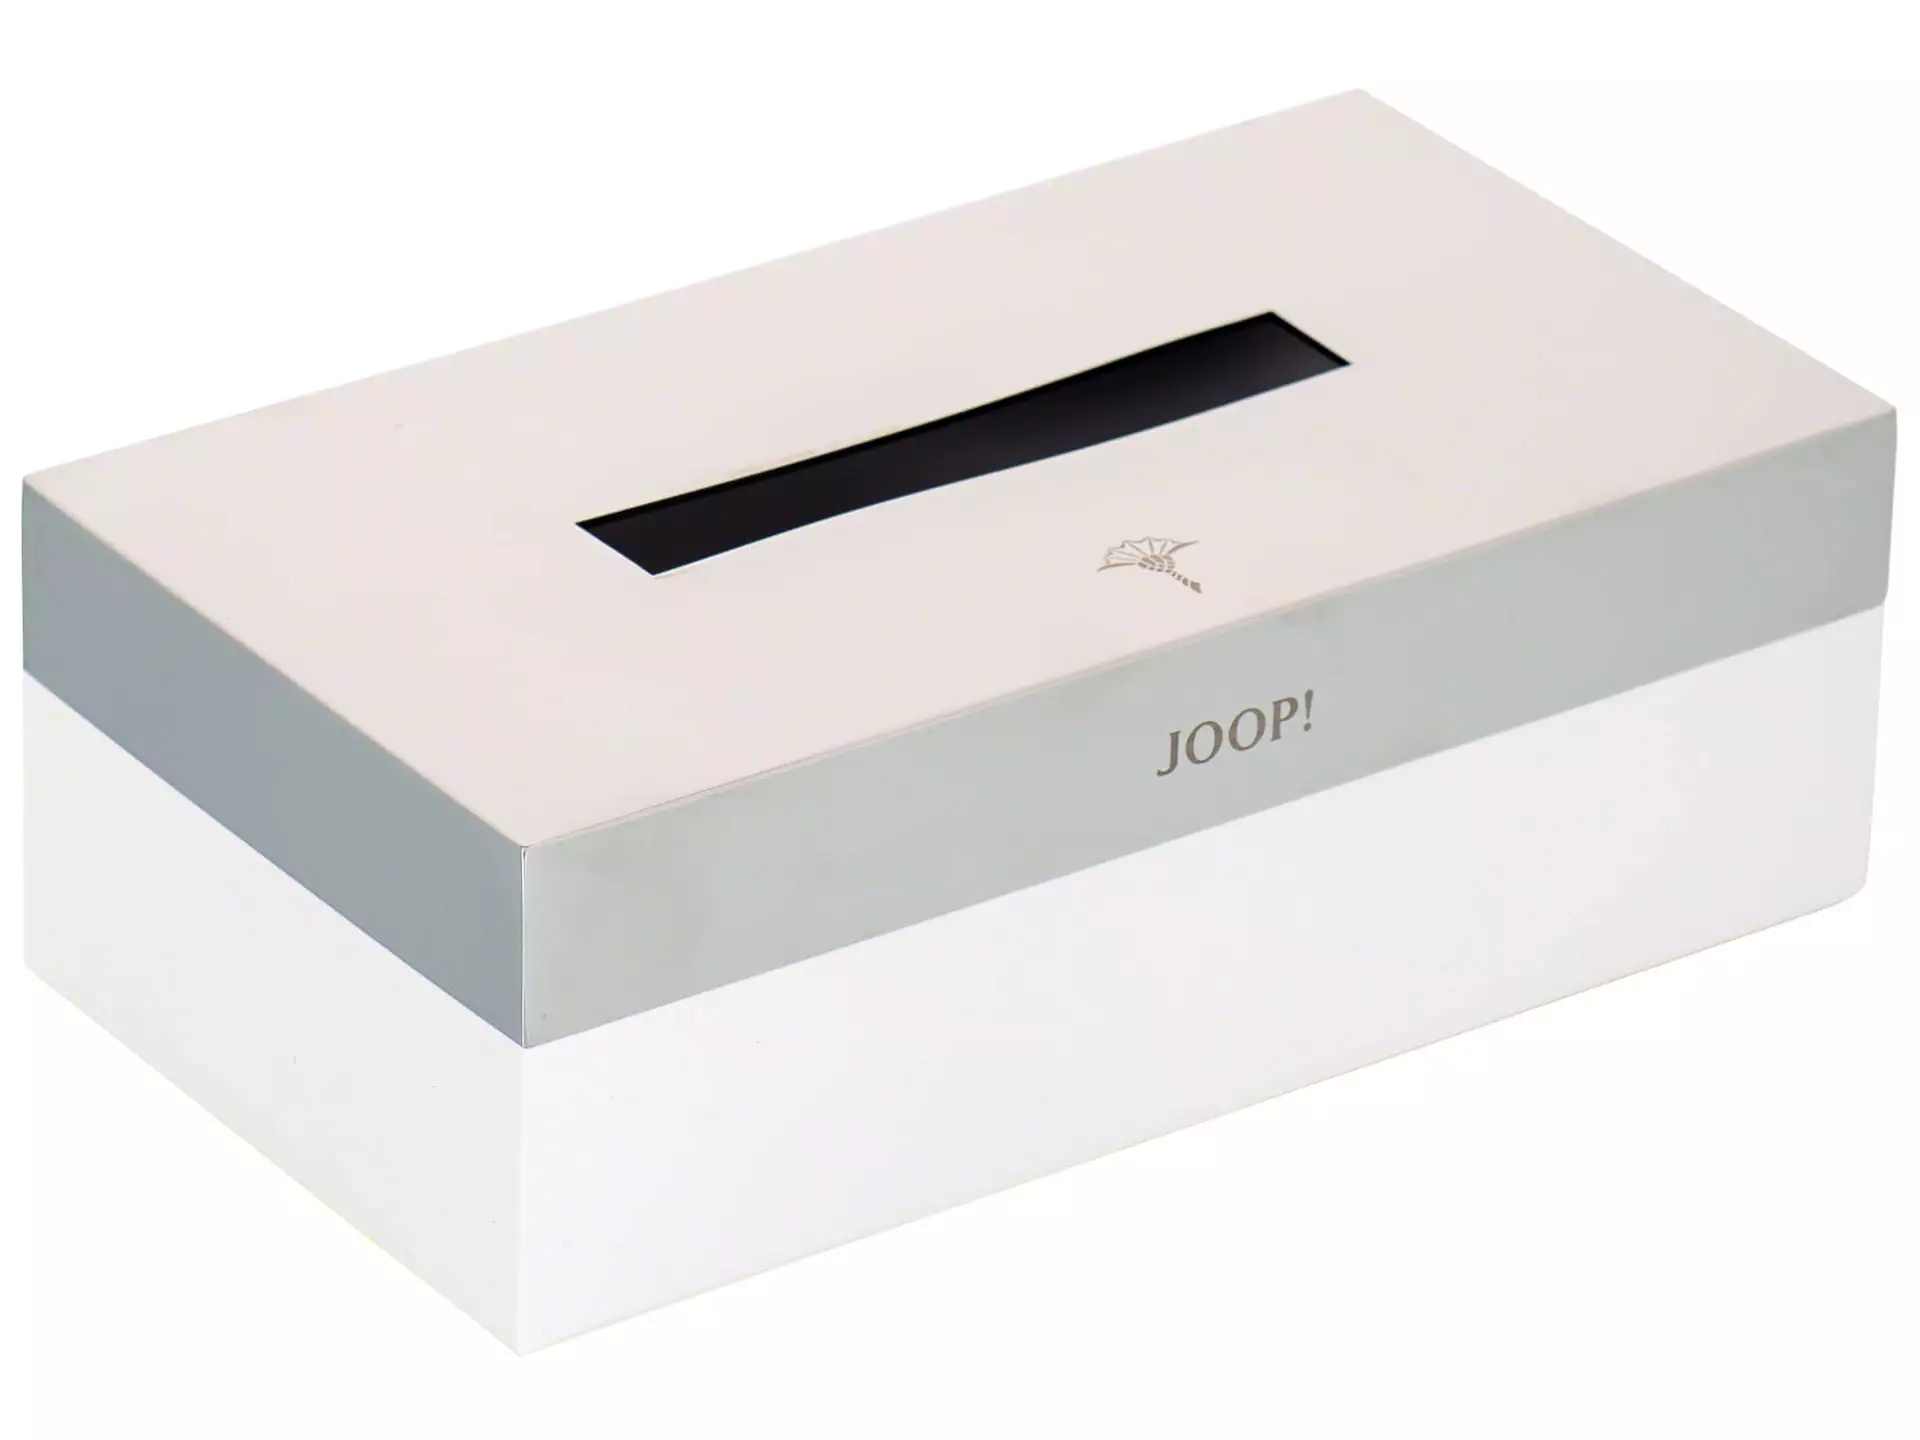 Kleenexbox Joop!, Chrom, Lack Weiss, b 23,6 cm h 8,5 cm t 12,5 cm